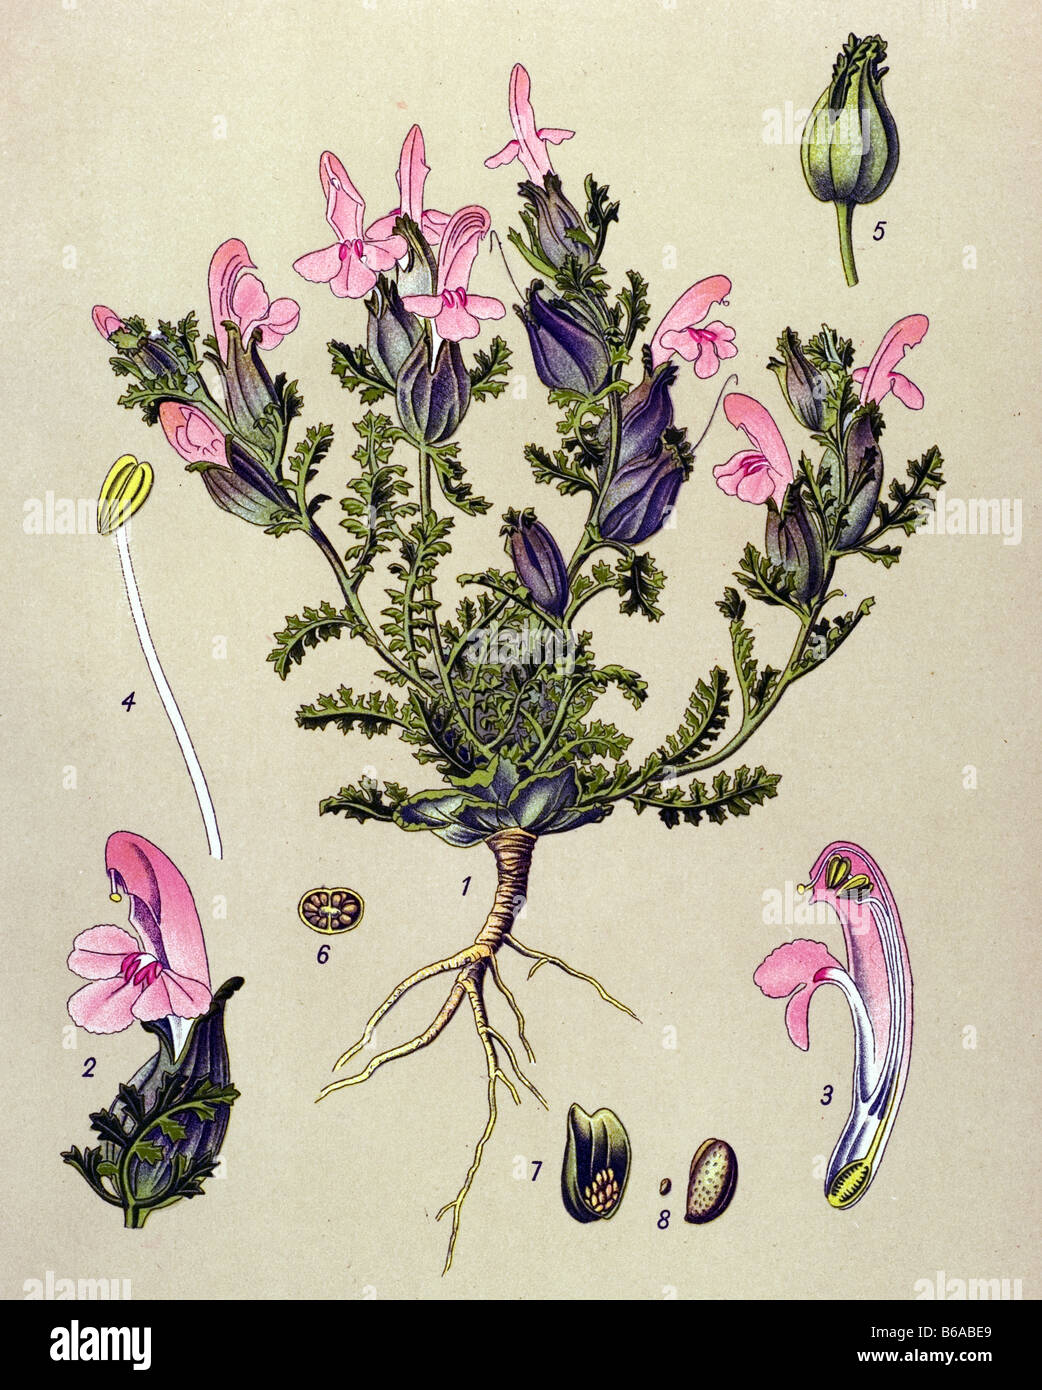 Lousewort, Pedicularis sylvatica poisonous plants illustrations Stock Photo